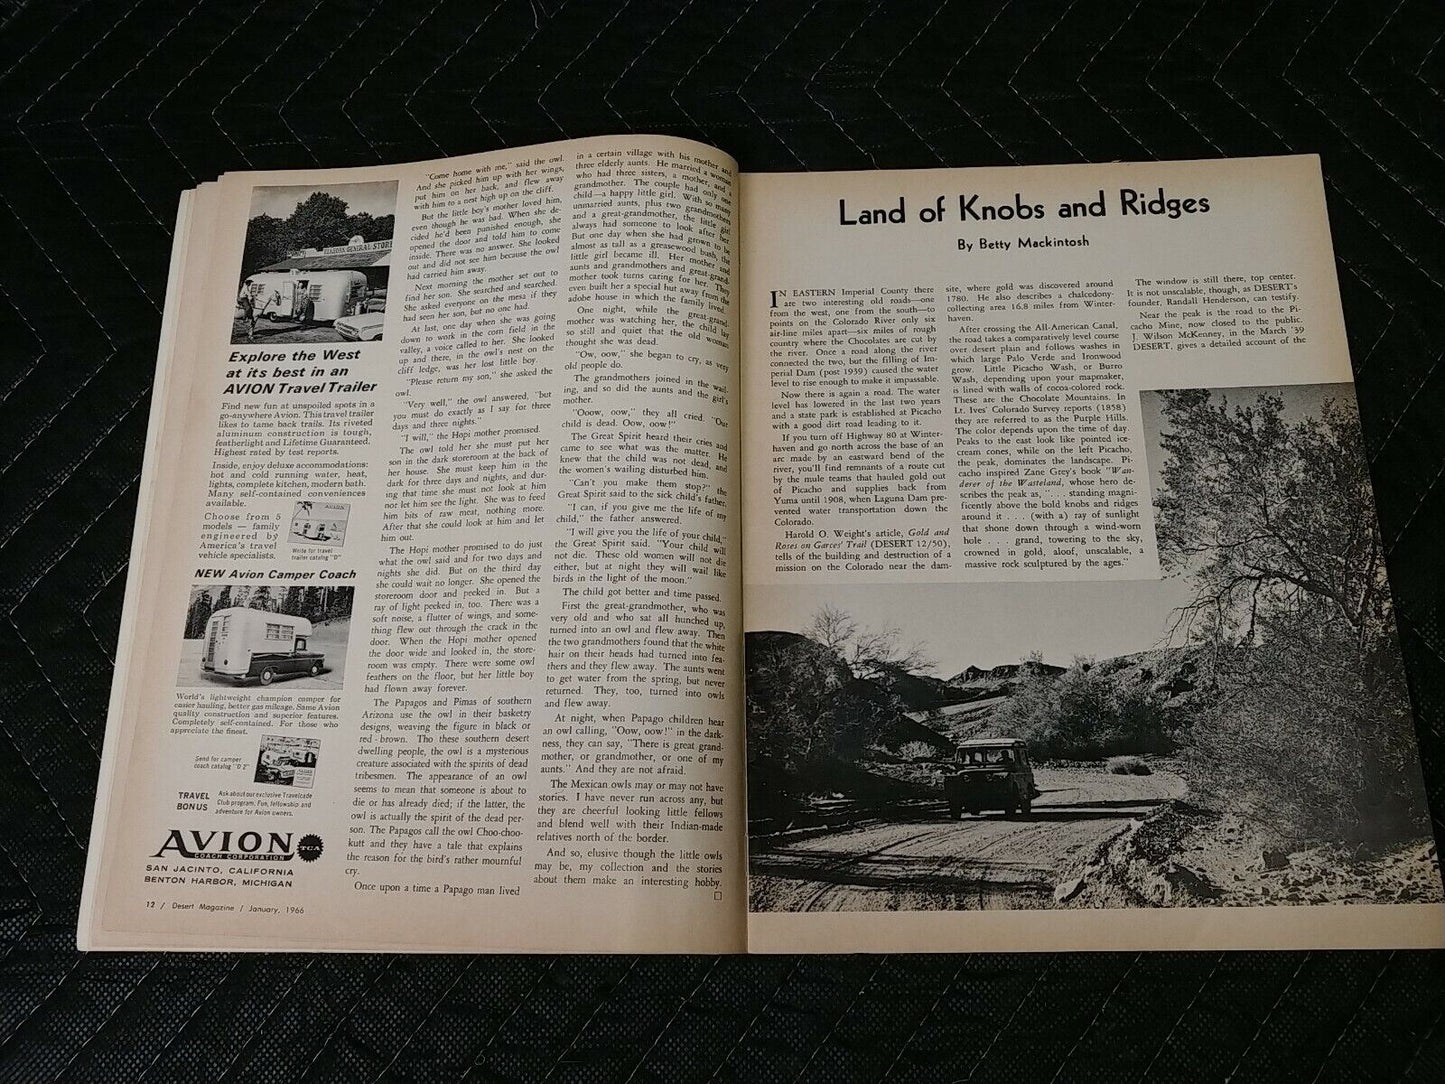 Vintage Desert Magazine January 1966